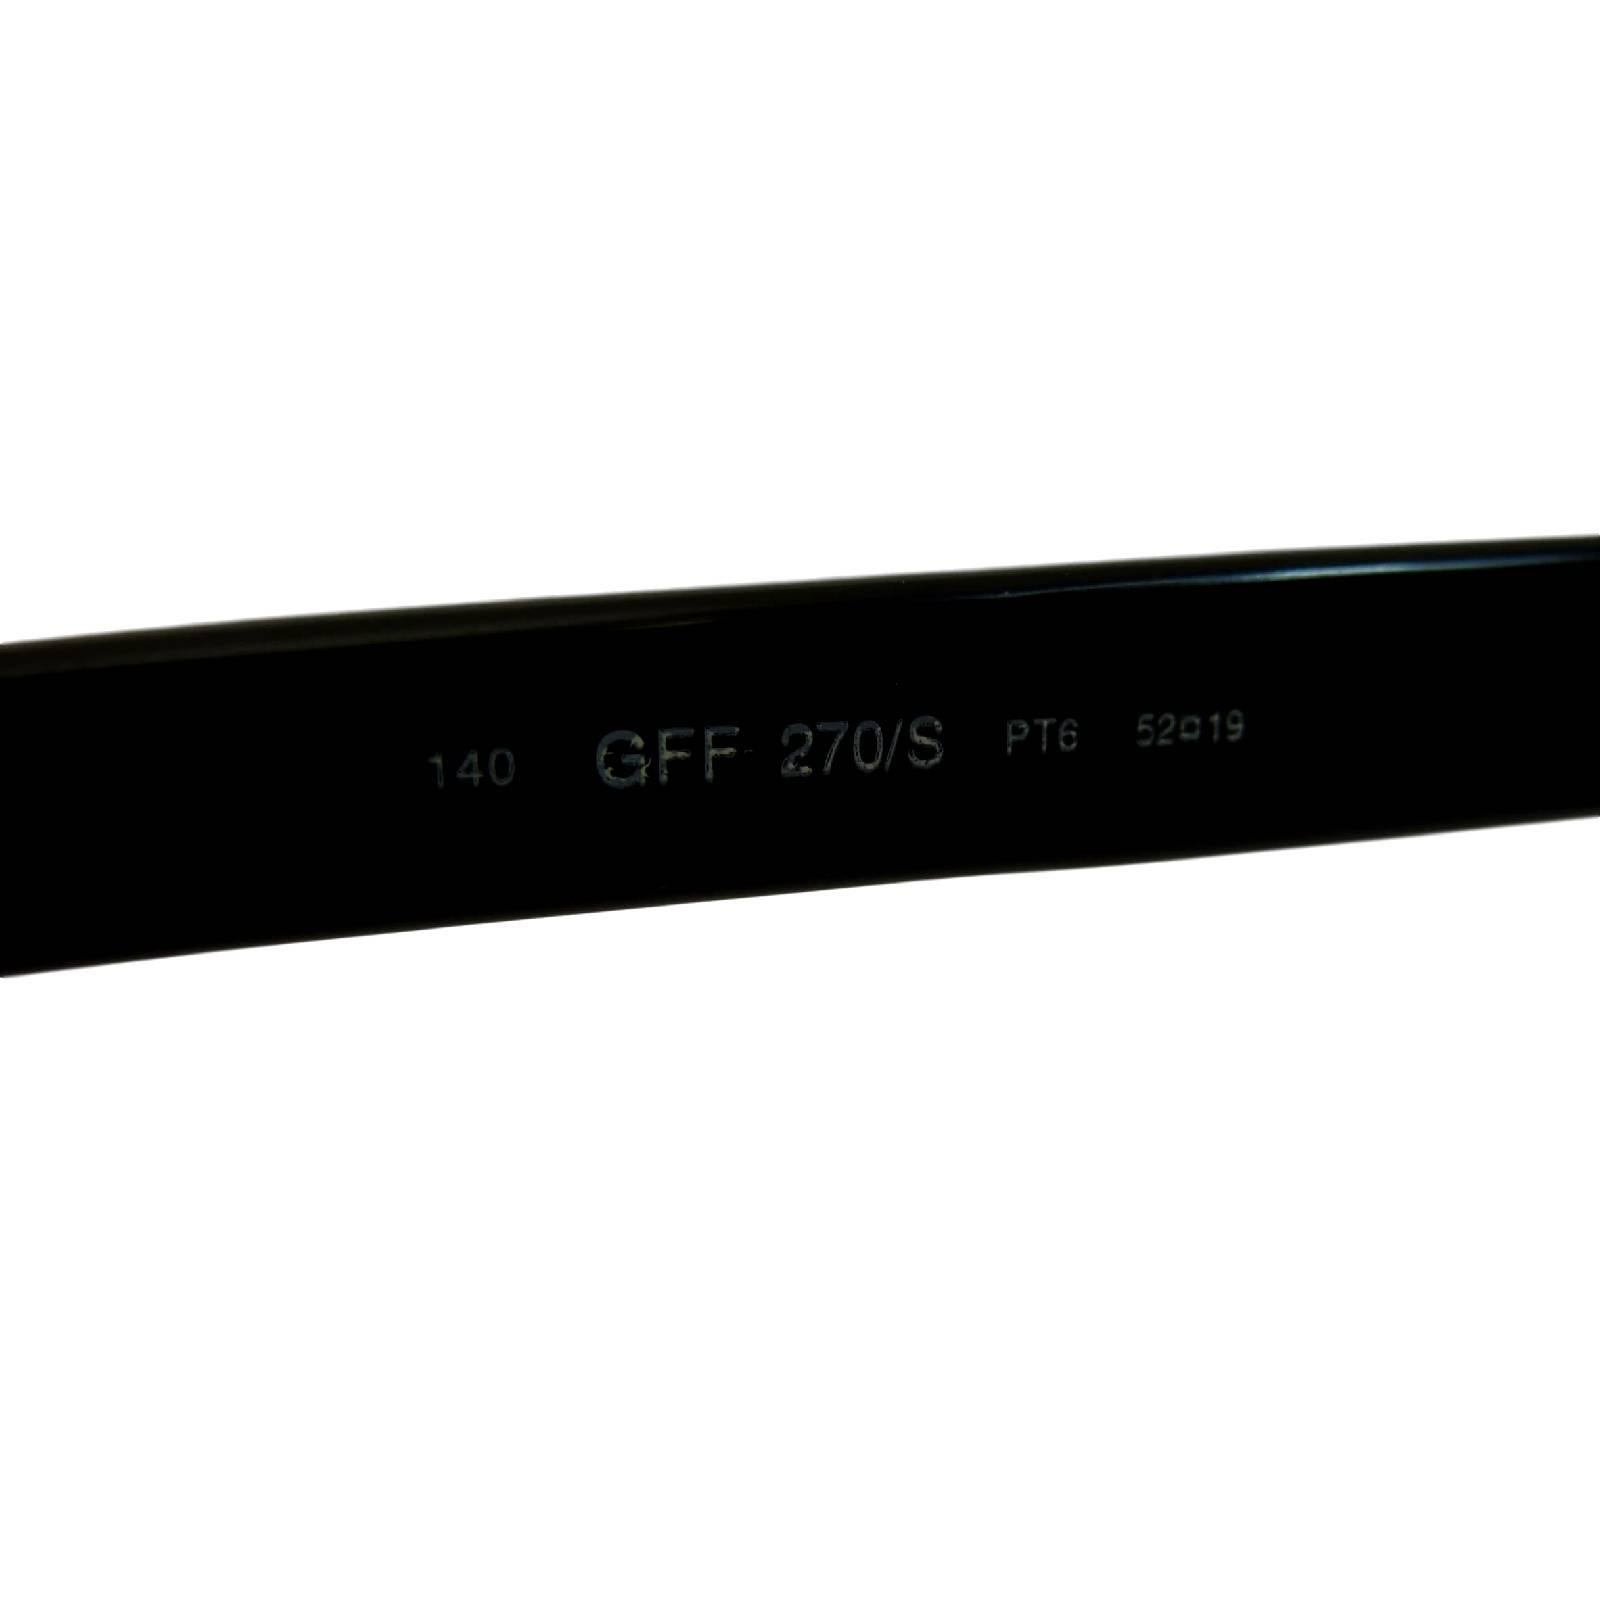 Gianfranco Ferre vintage sunglasses GFF 270/S bone and metal gold 1980s black 2